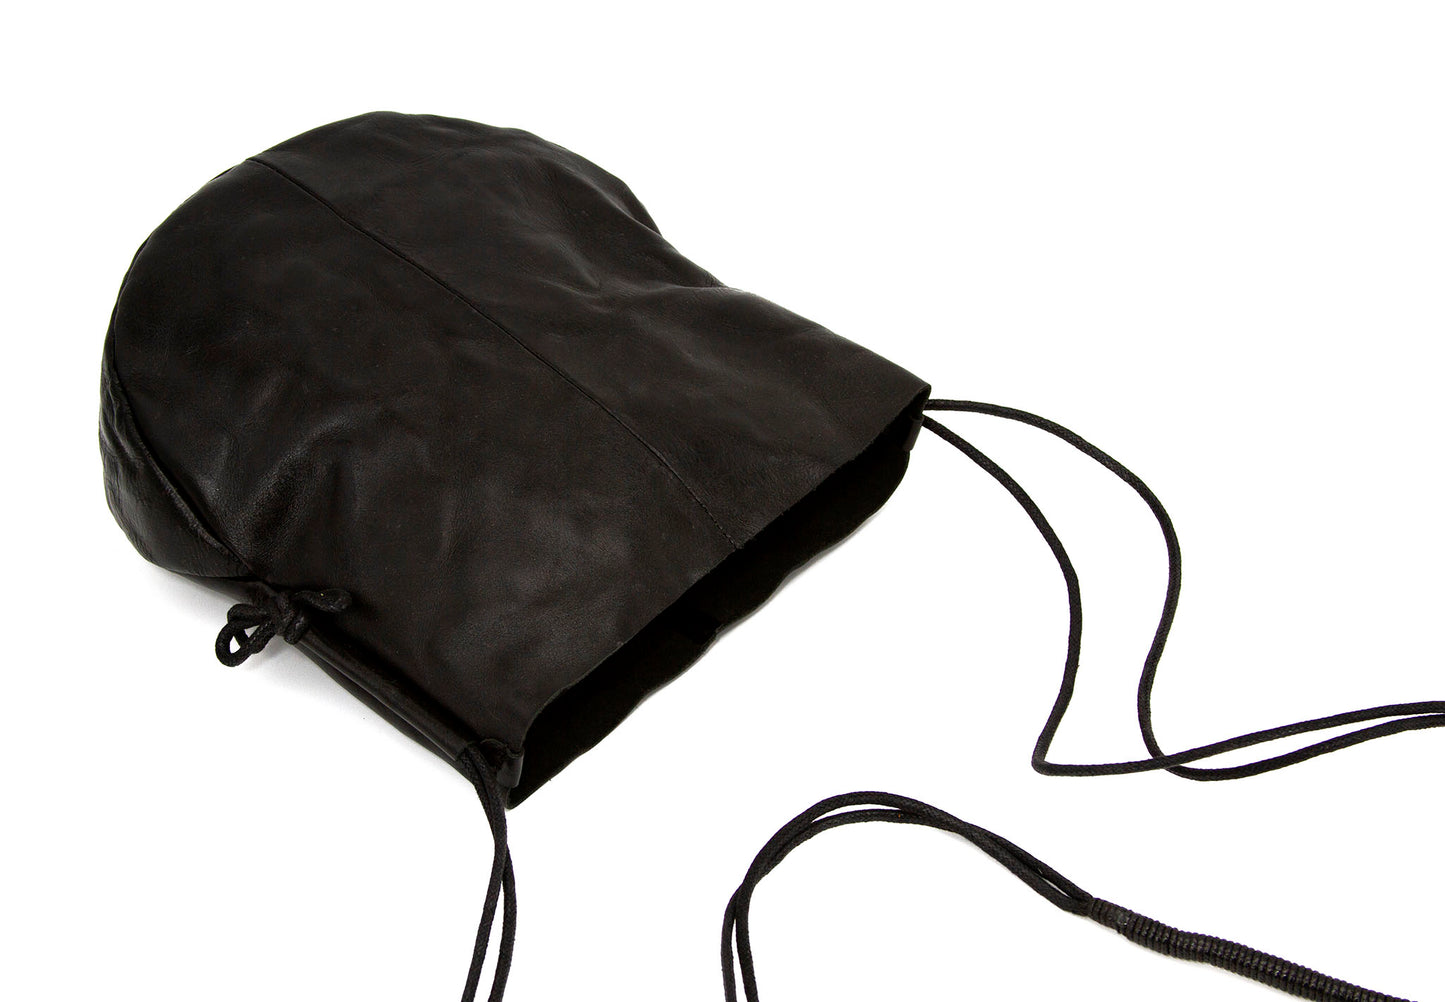 Wrinkled leather round bottom bag